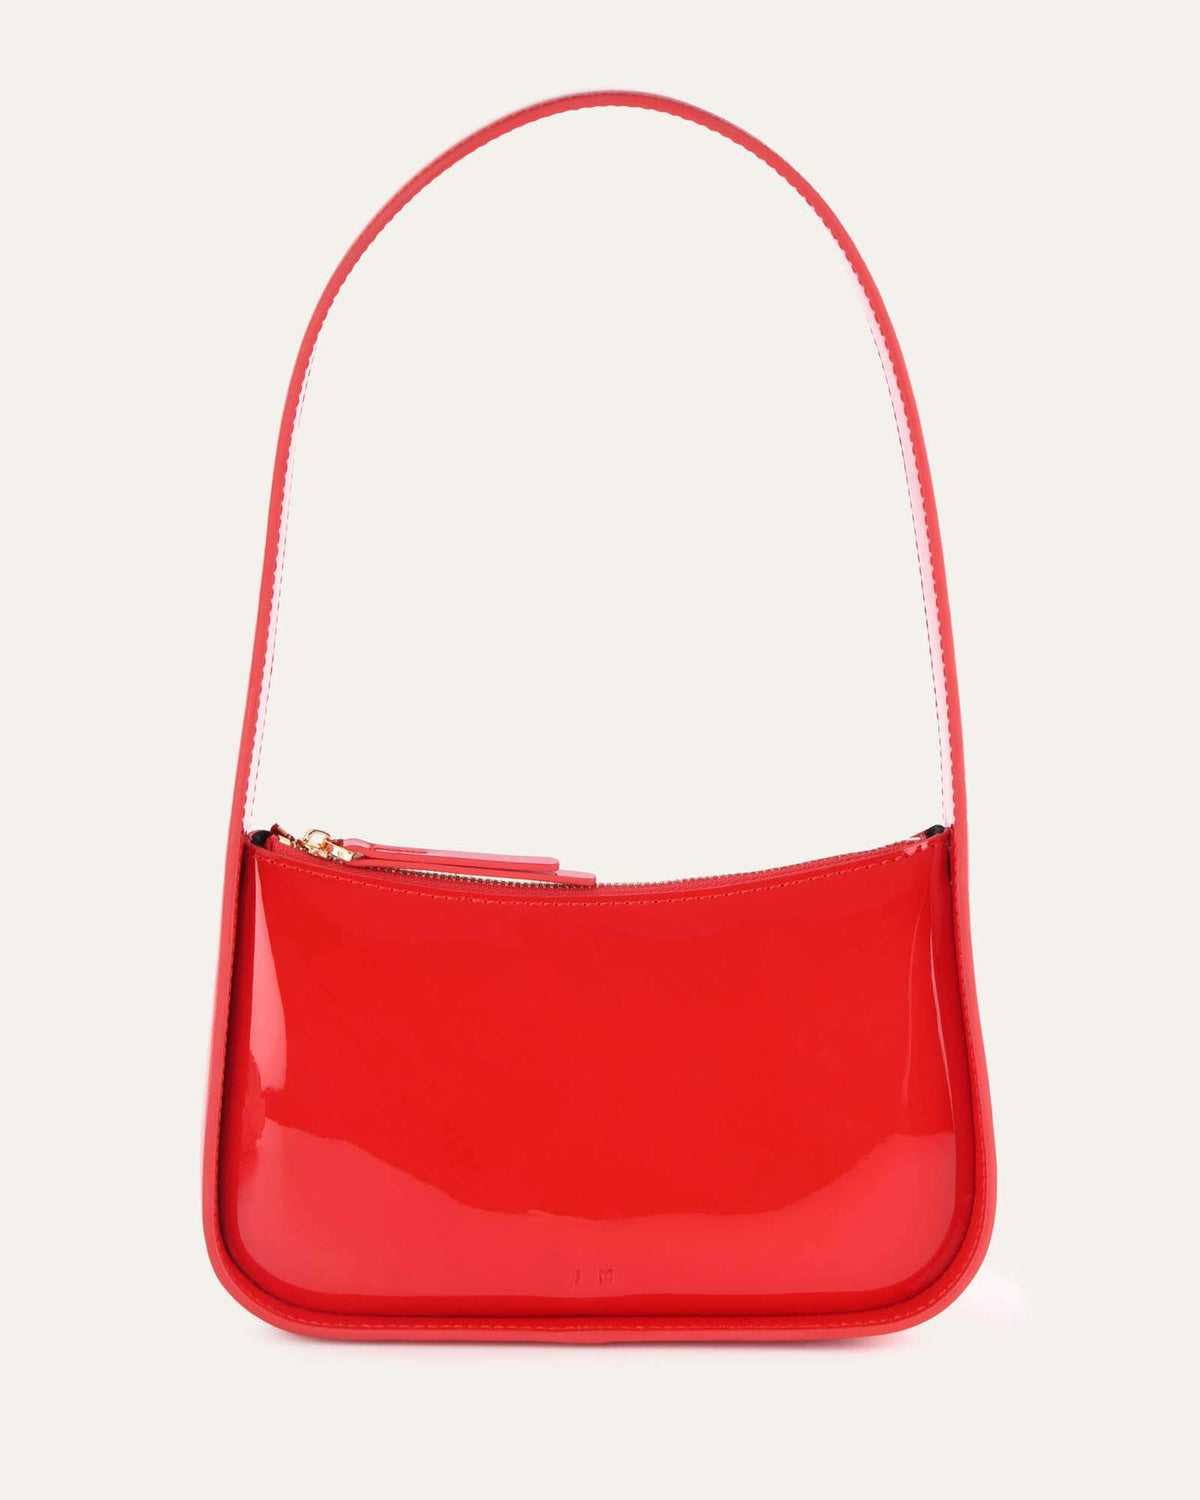 SCOUT SHOULDER BAG RED PATENT